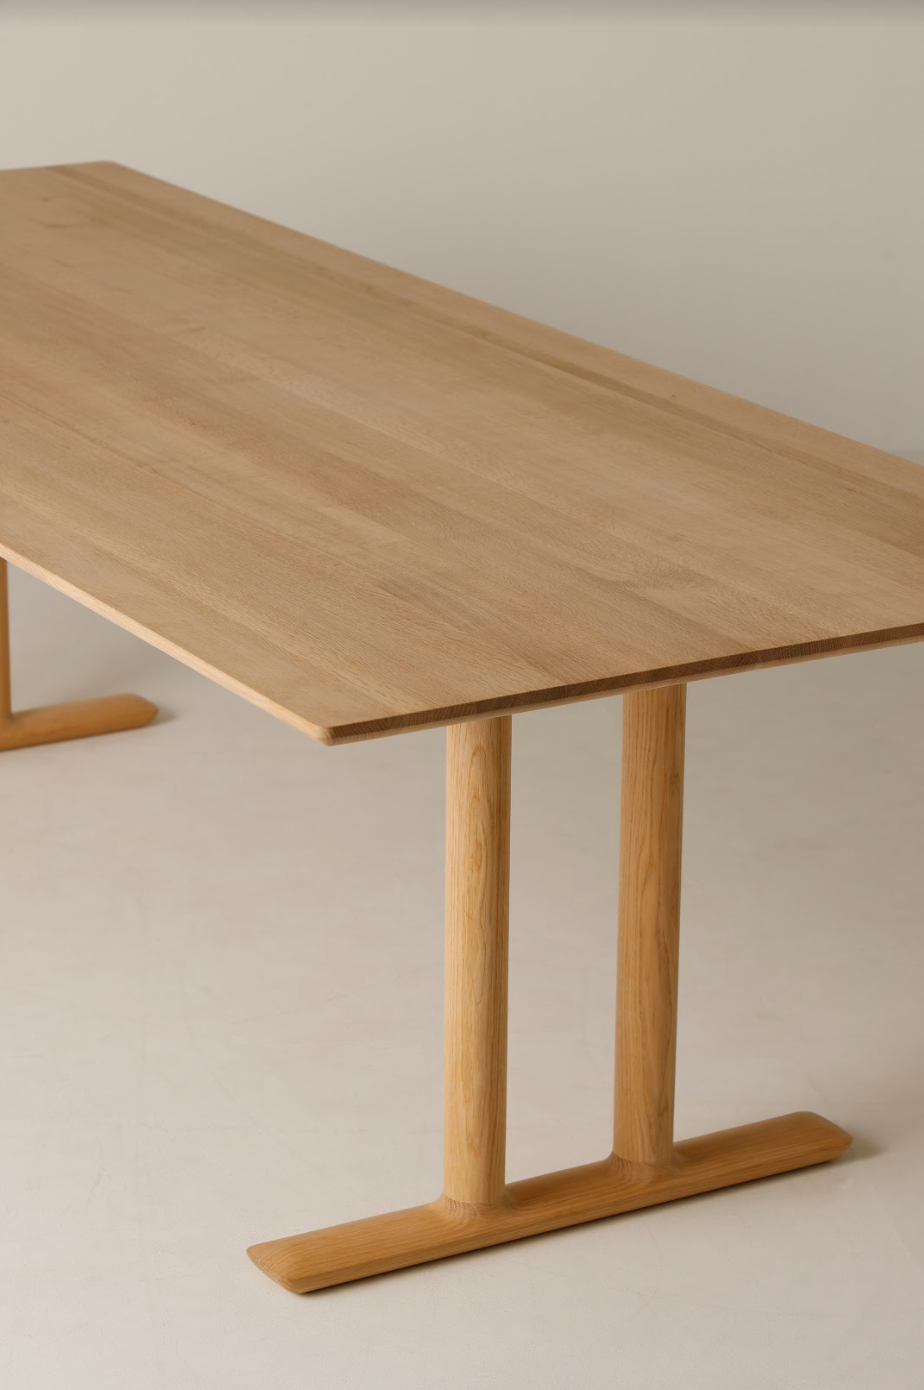 Handmade Japanese wooden dining table